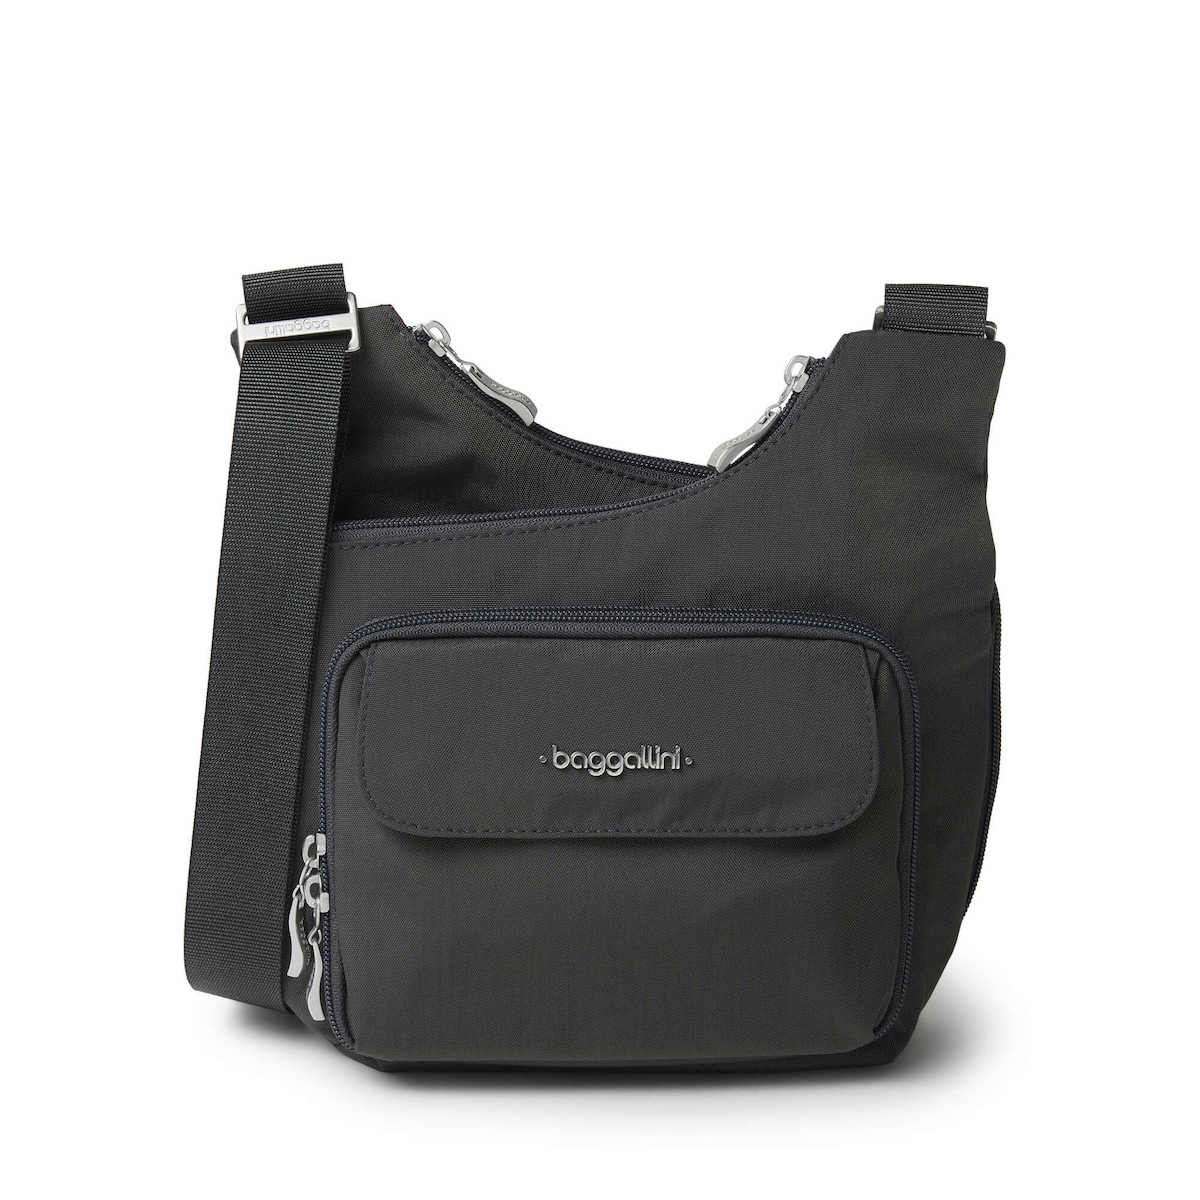 Baggallini Everyplace Crossbody Black Nylon Travel Purse Shoulder Bag Gray  Line | eBay